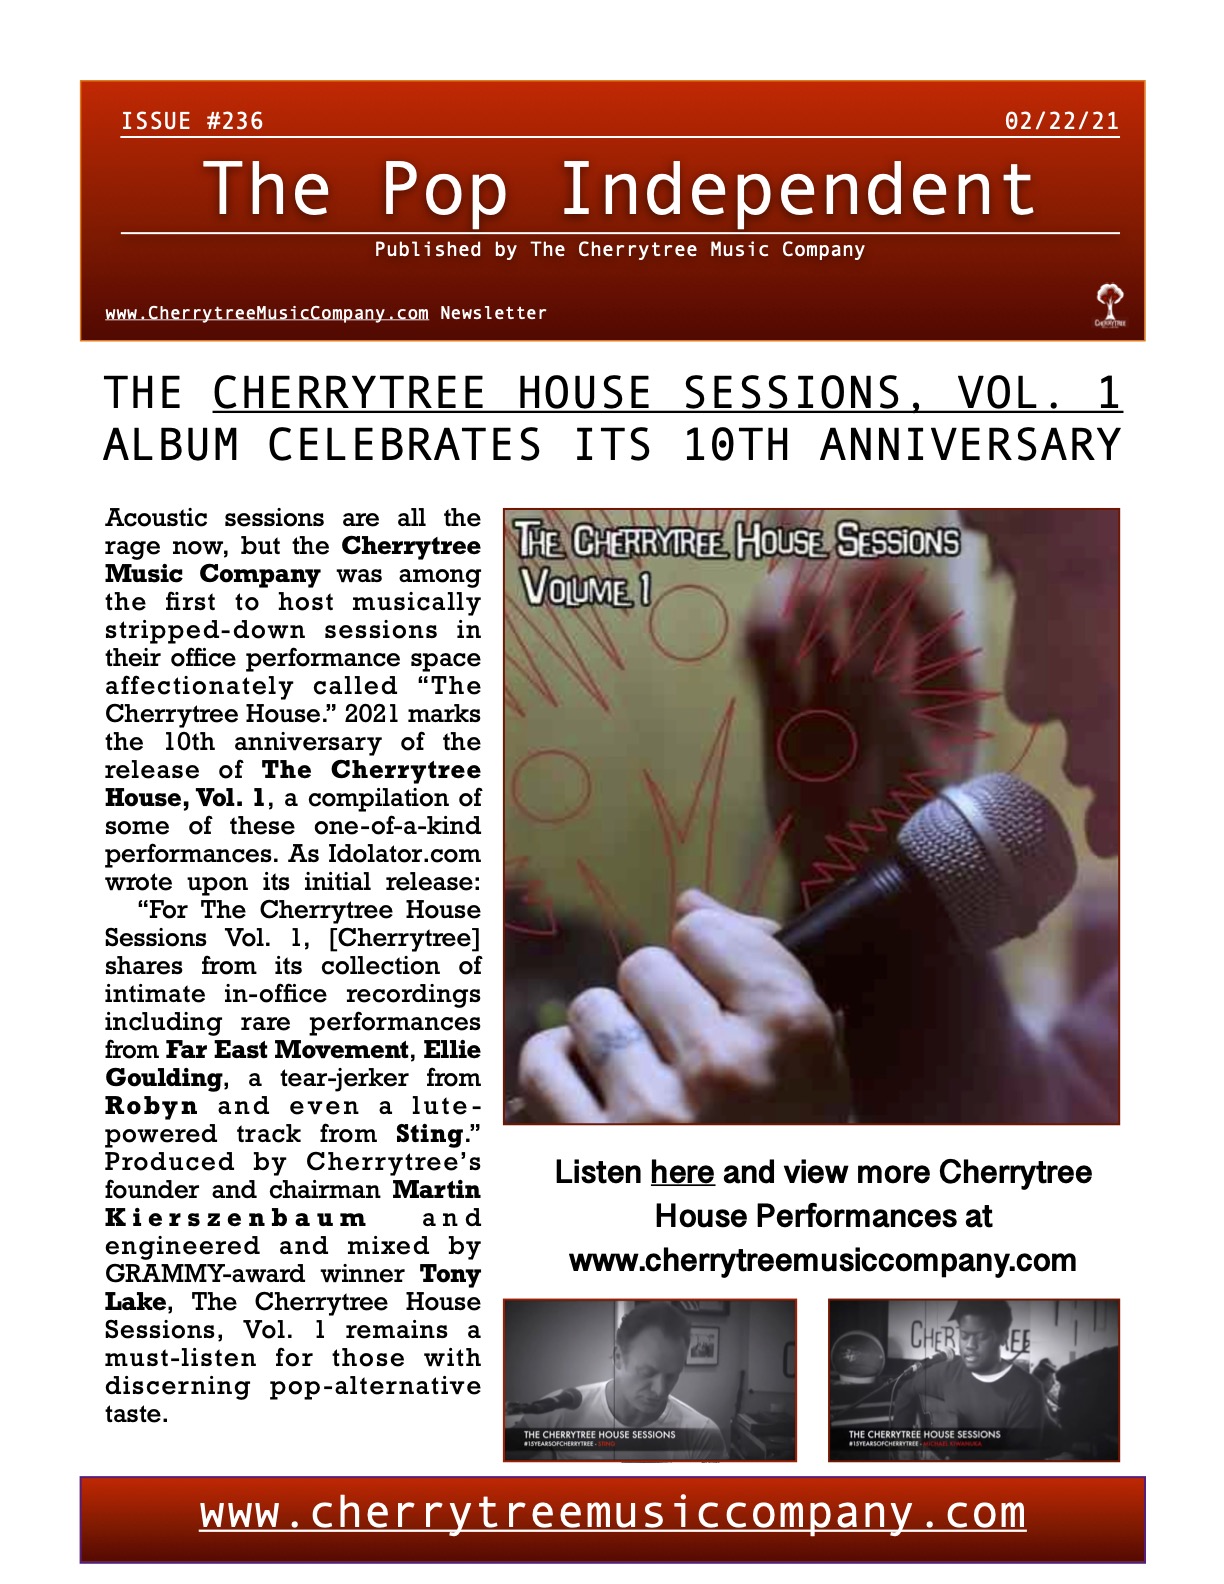 The Pop Alternative, Issue 236